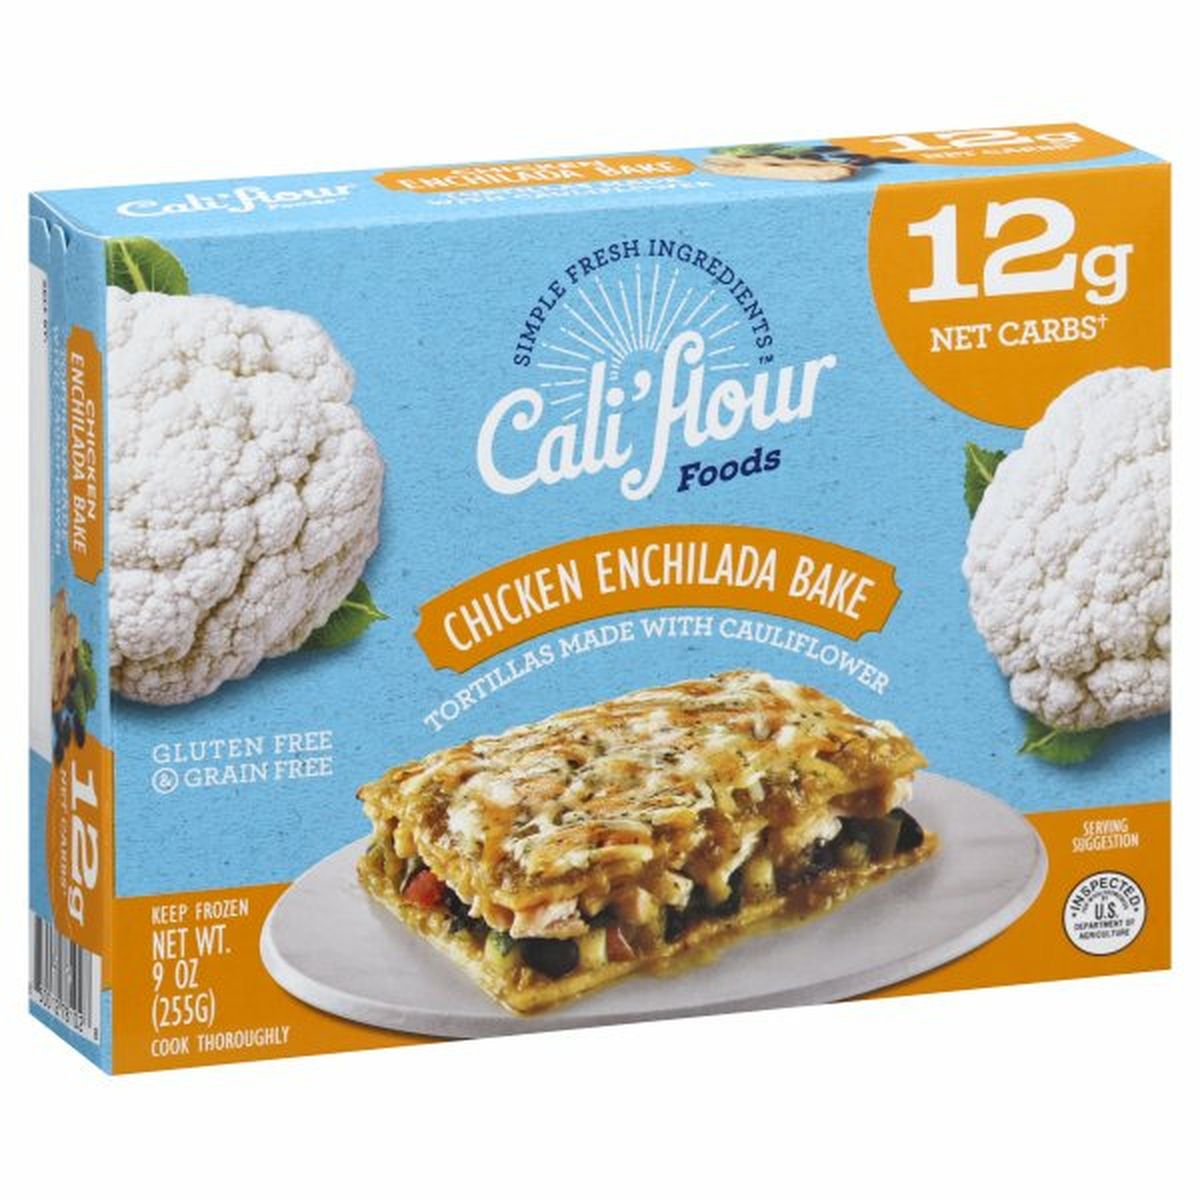 Calories in Cali'flour Foods Enchilada Bake, Chicken